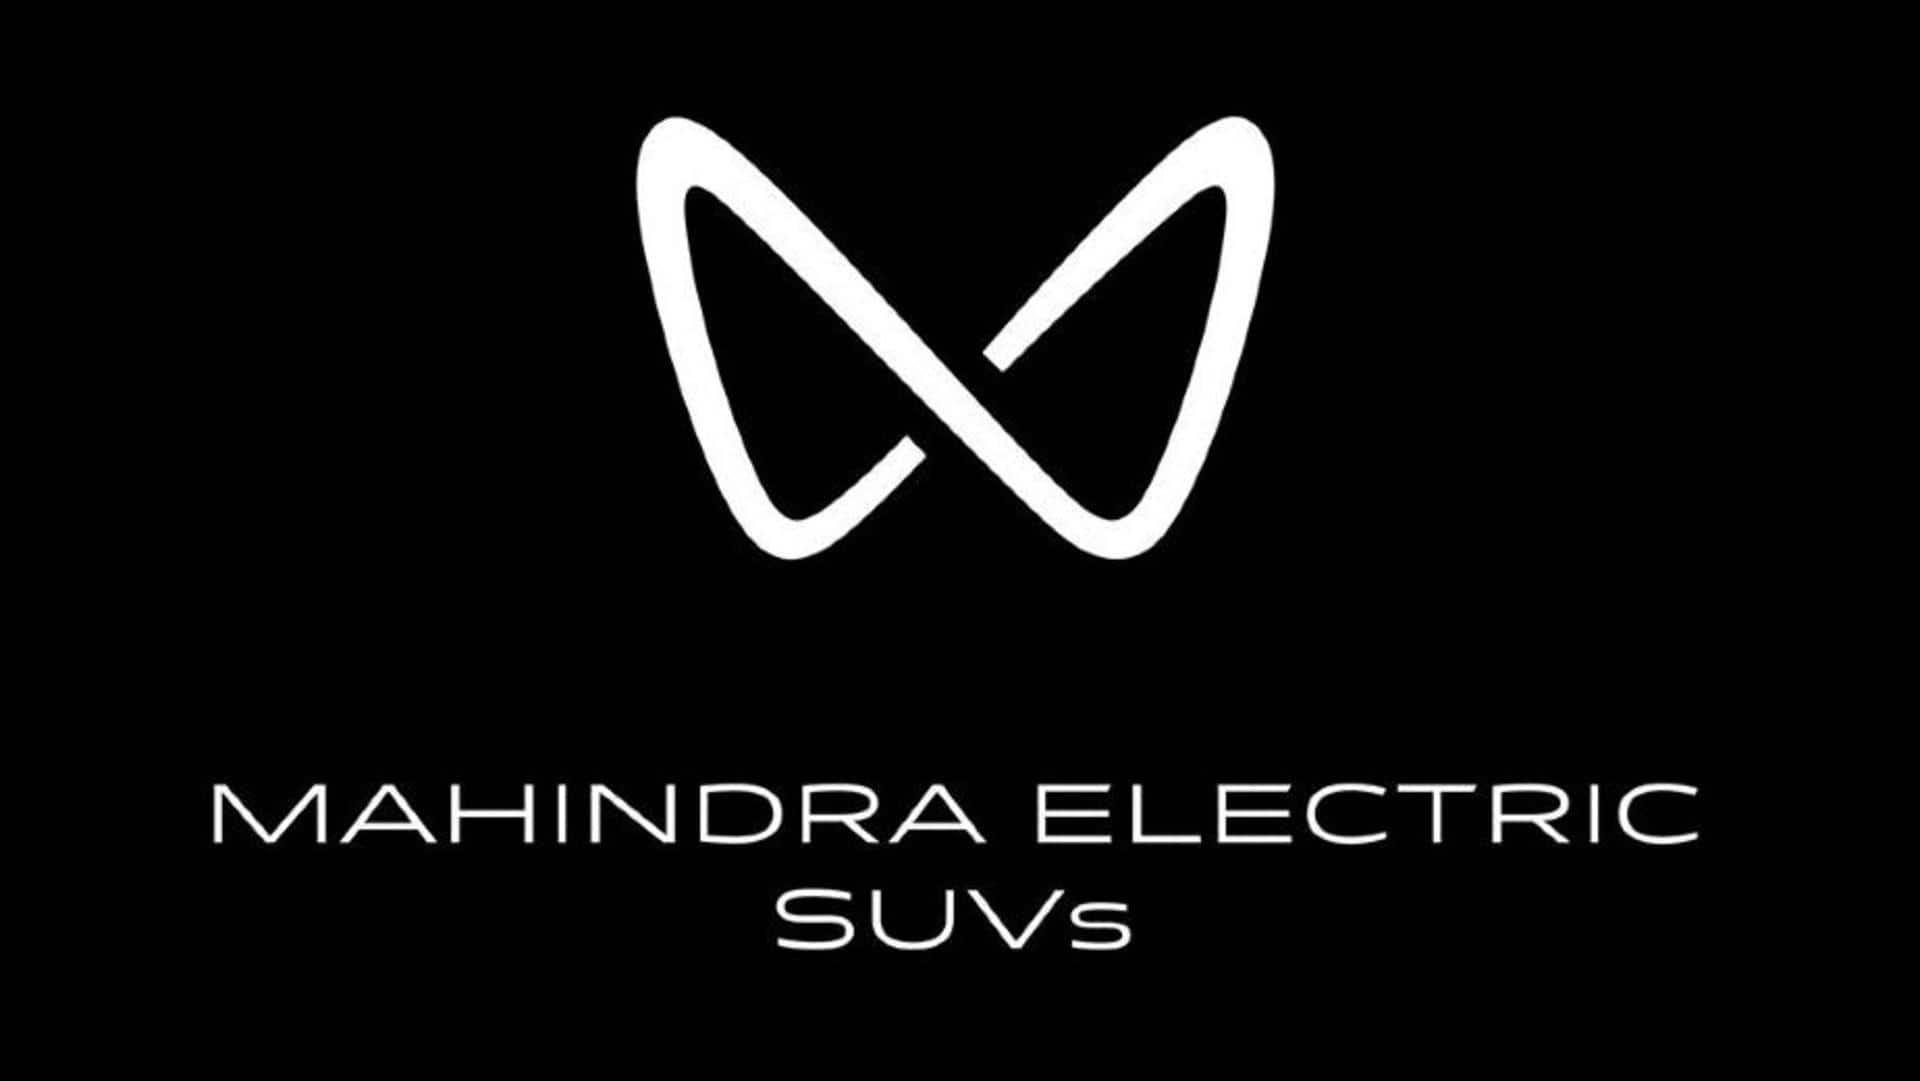 Mahindra reveals fresh branding and audio identity for EVs